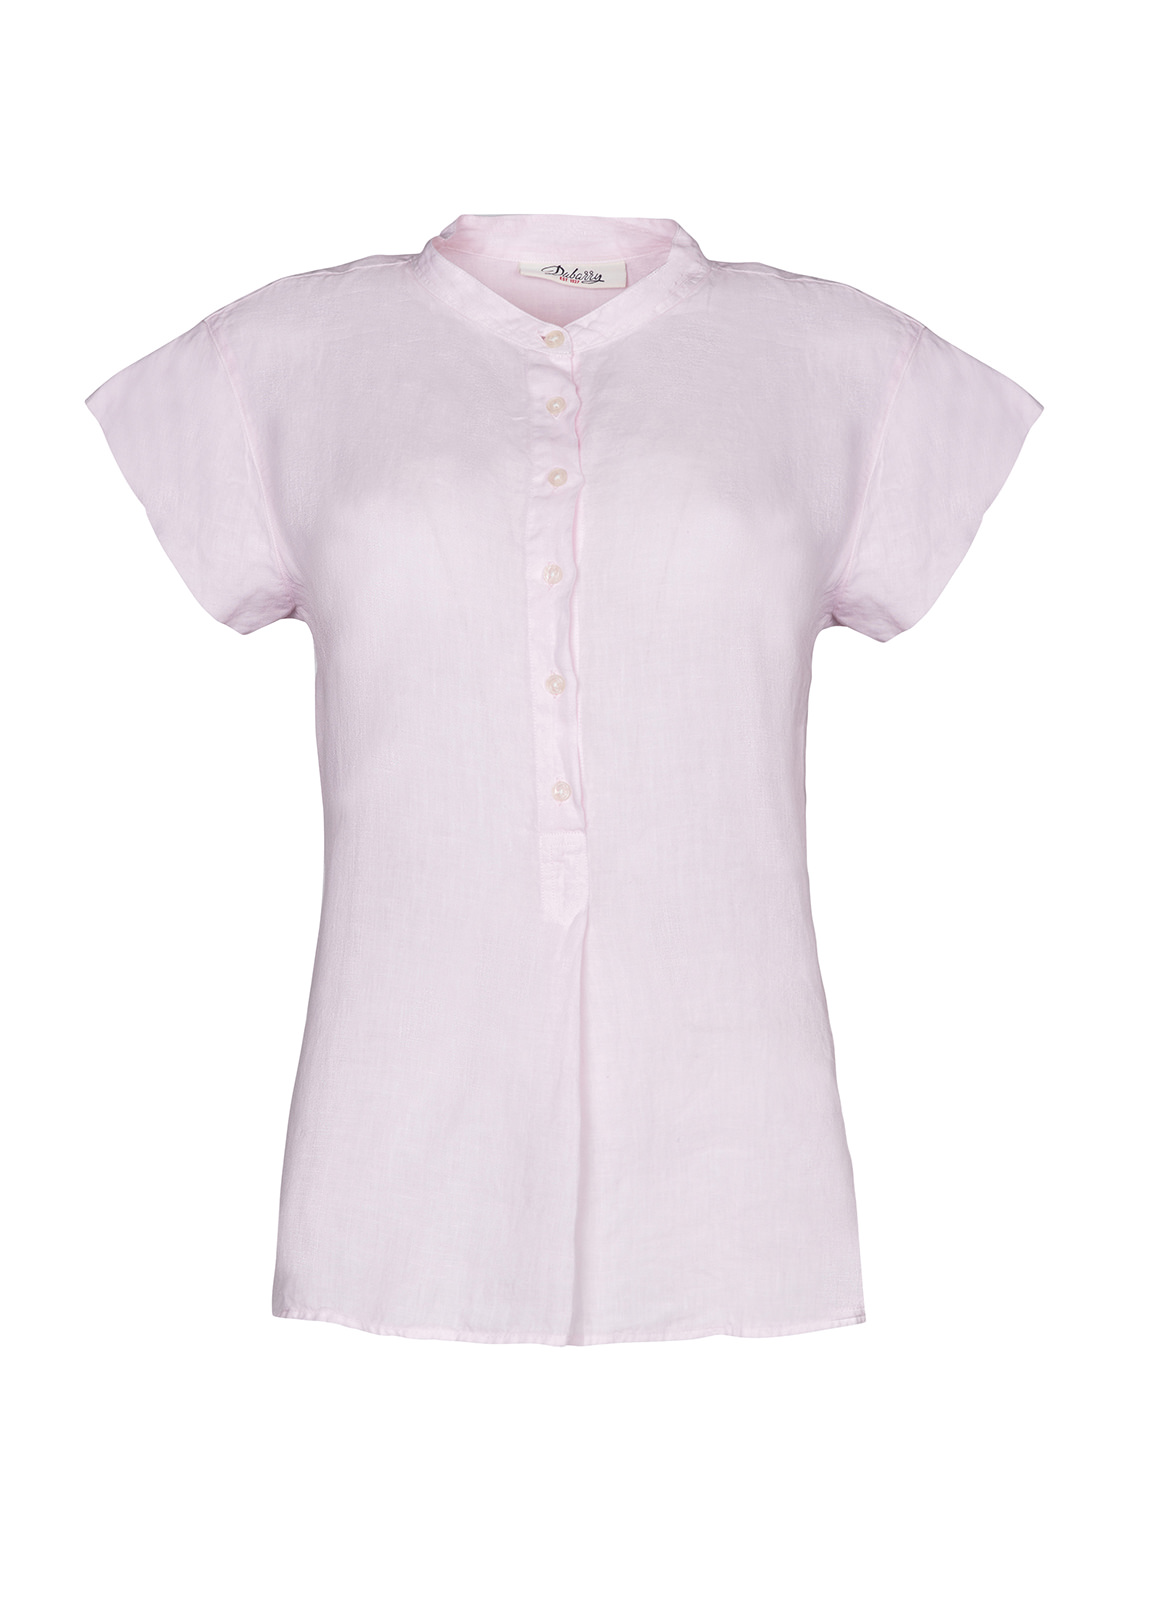 Dubarry_ Crocus Shirt - Pale Pink_Image_2